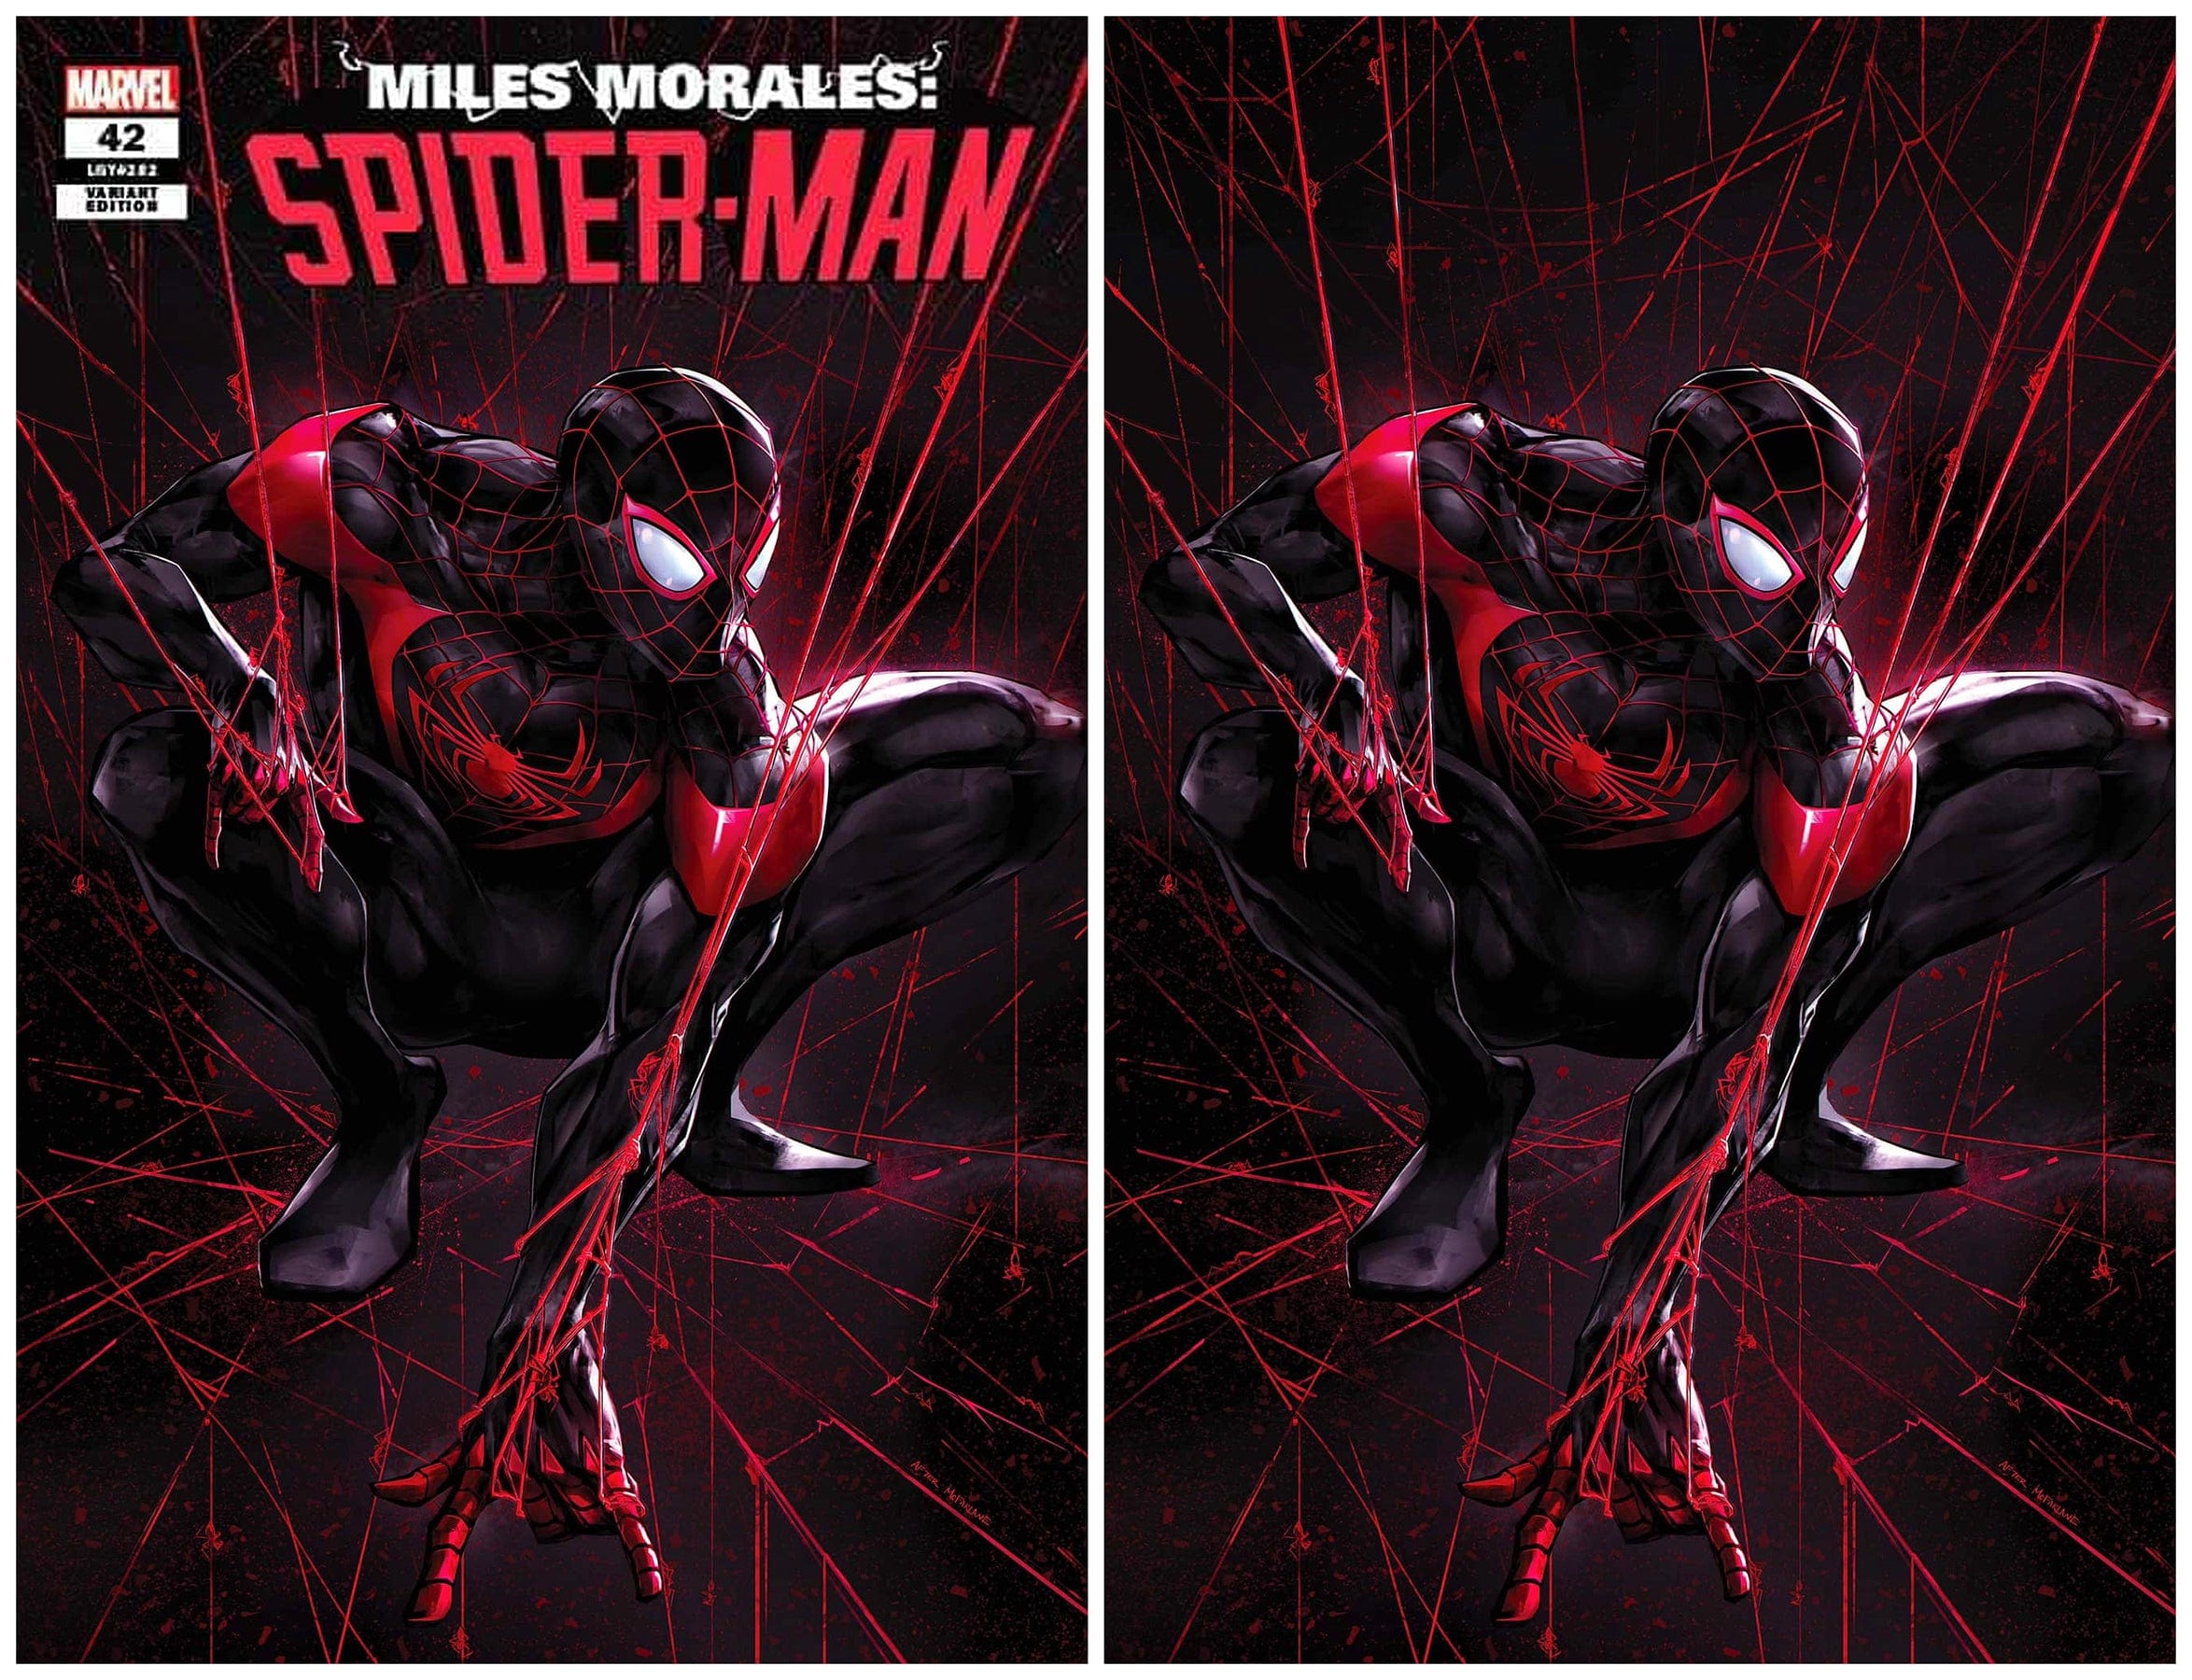 MILES MORALES: SPIDER-MAN #39 IVAN TAO NYCC EXCLUSIVE RED VIRGIN